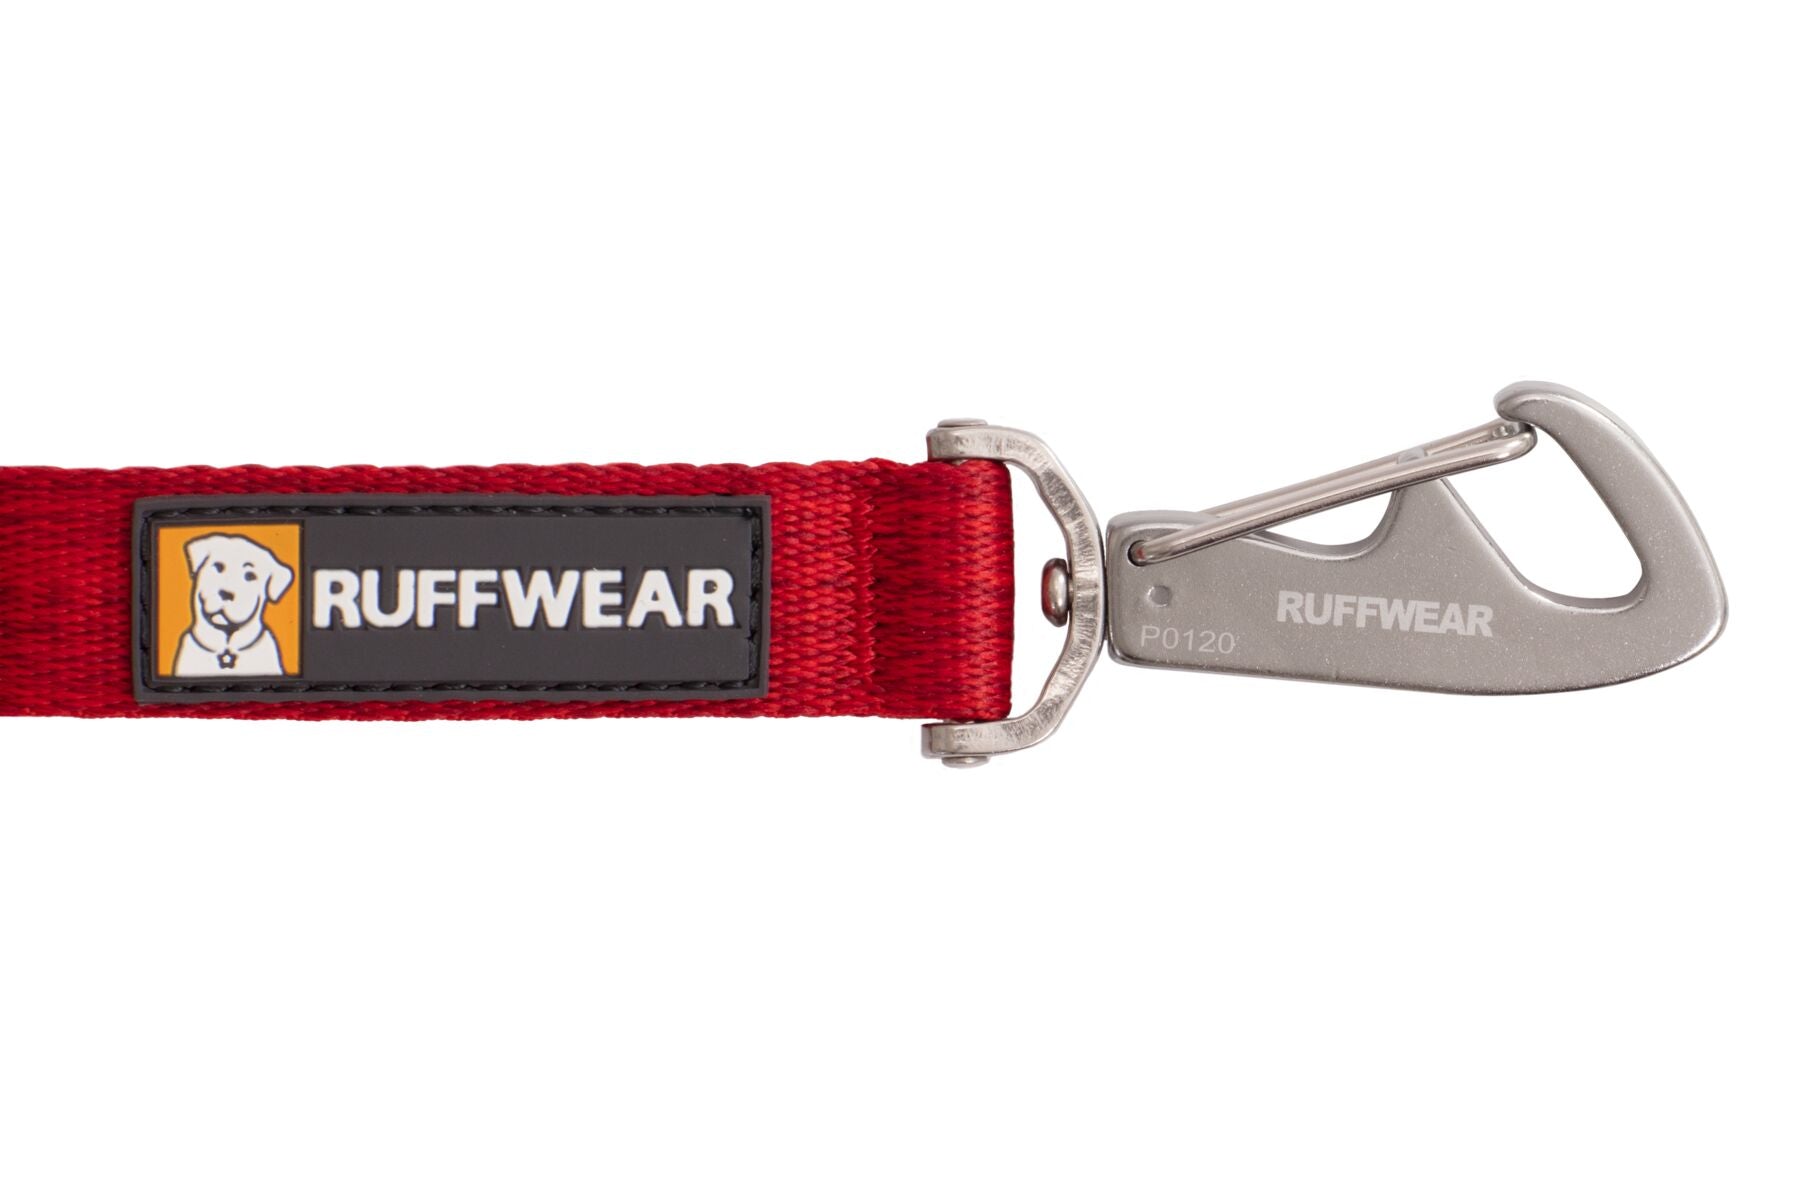 Ruffwear Switchbak Leash - redesigned